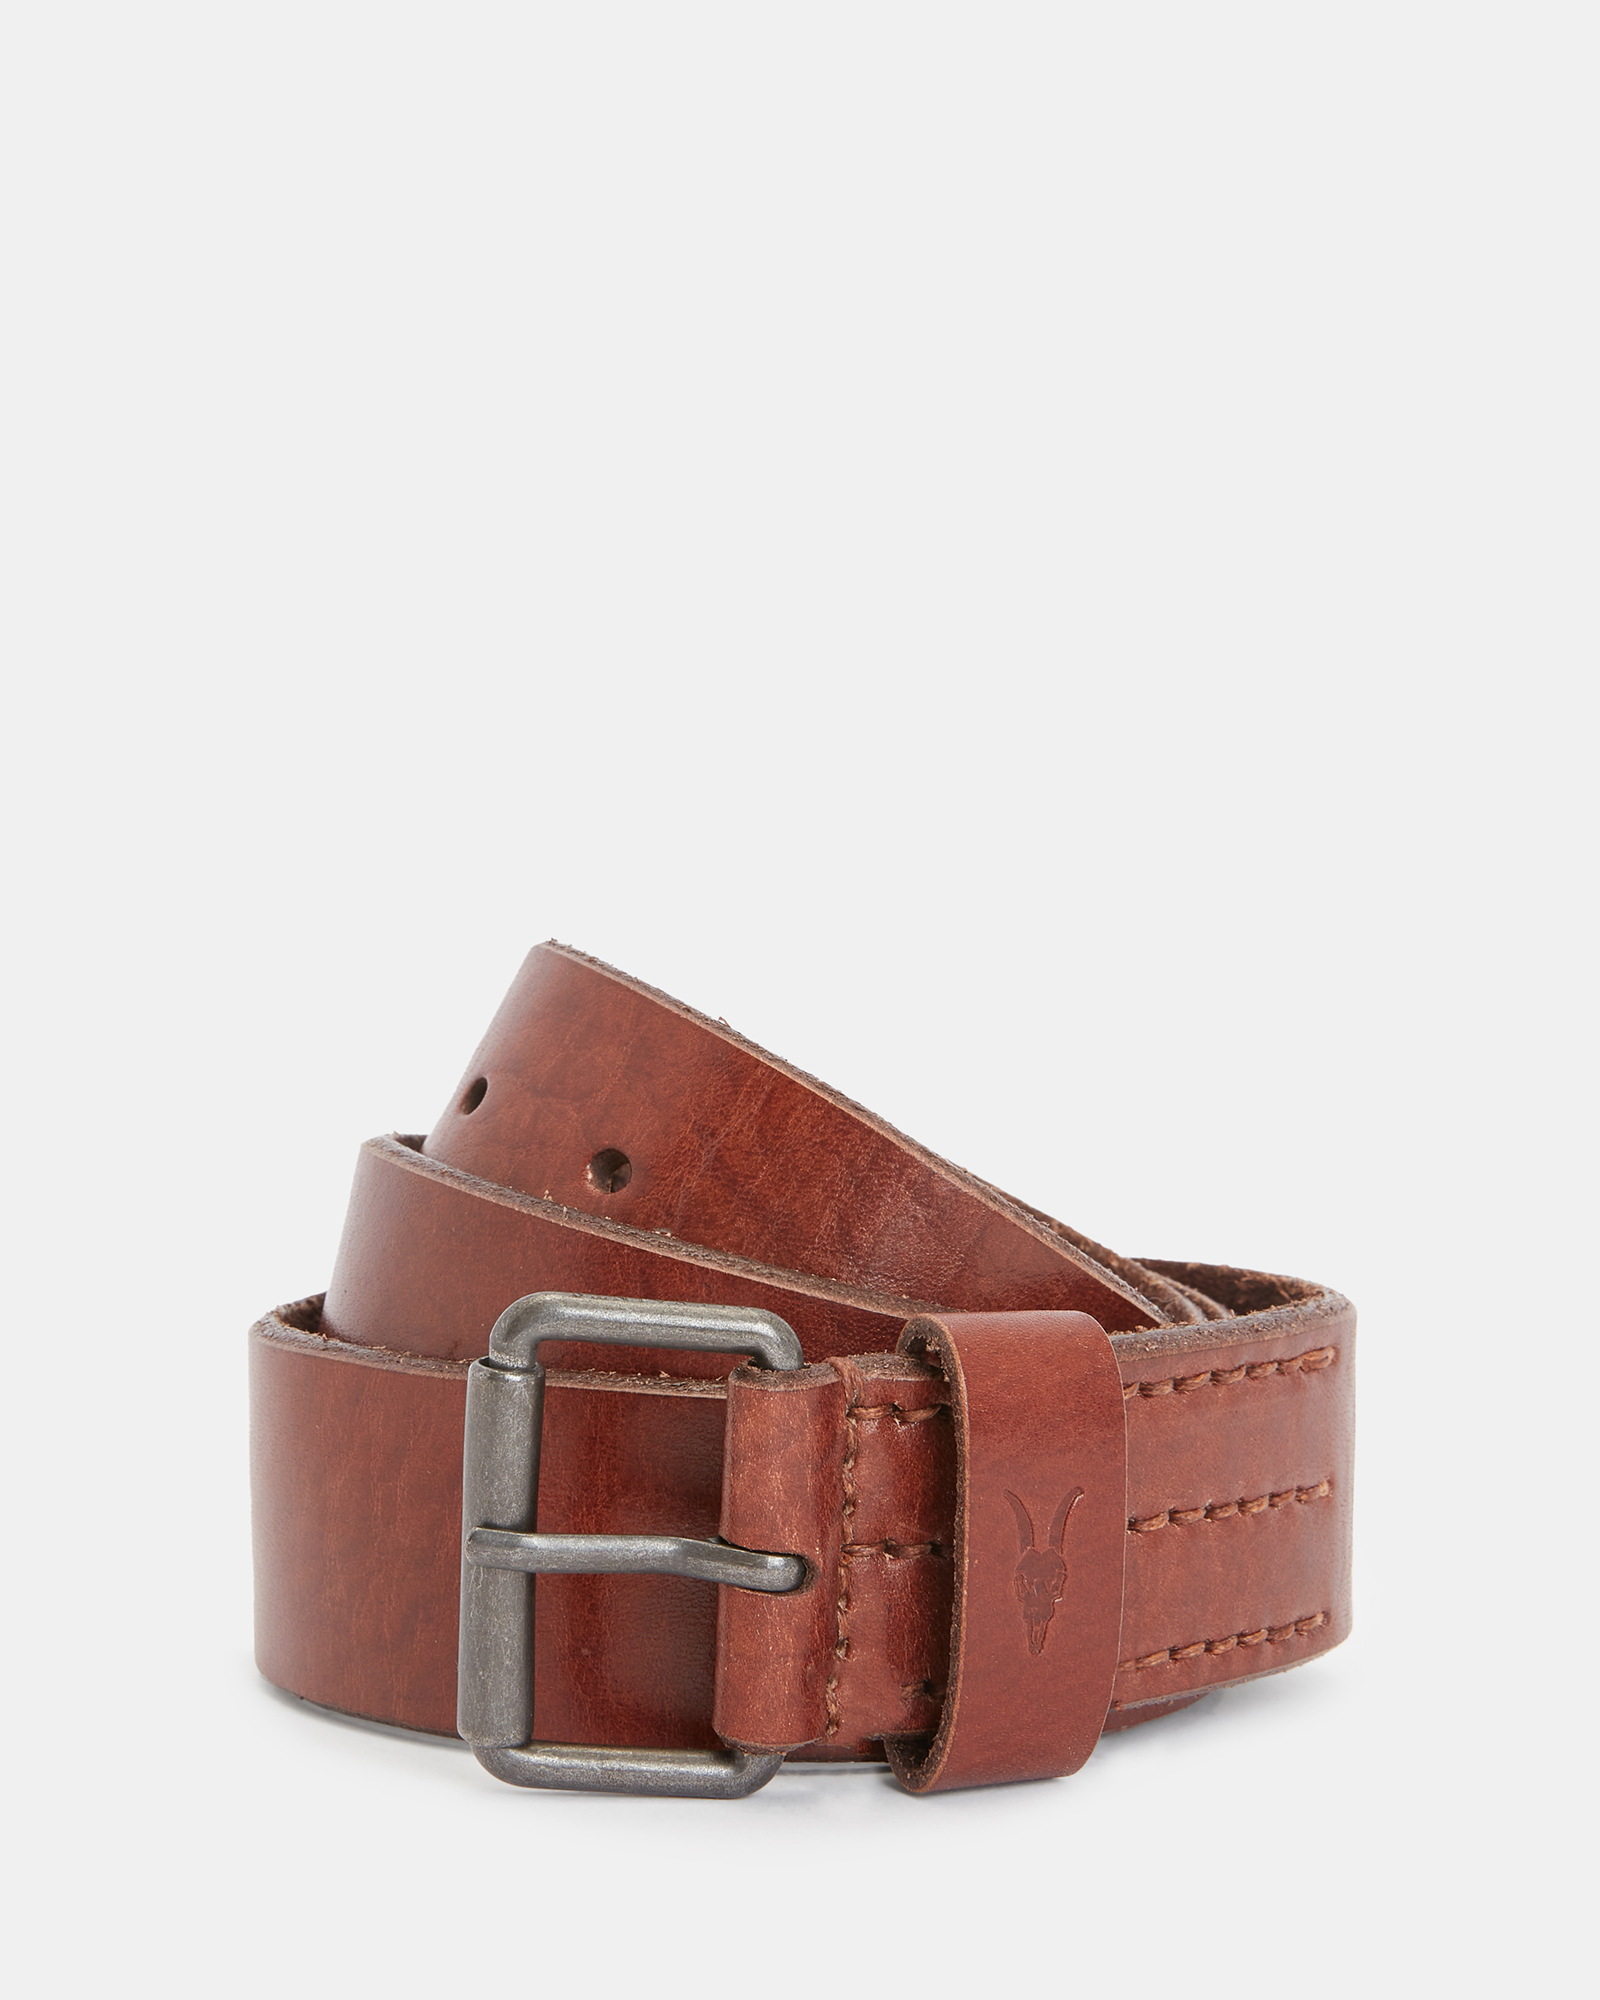 Dunston Leather Shine Belt TAN/DULL NICKEL